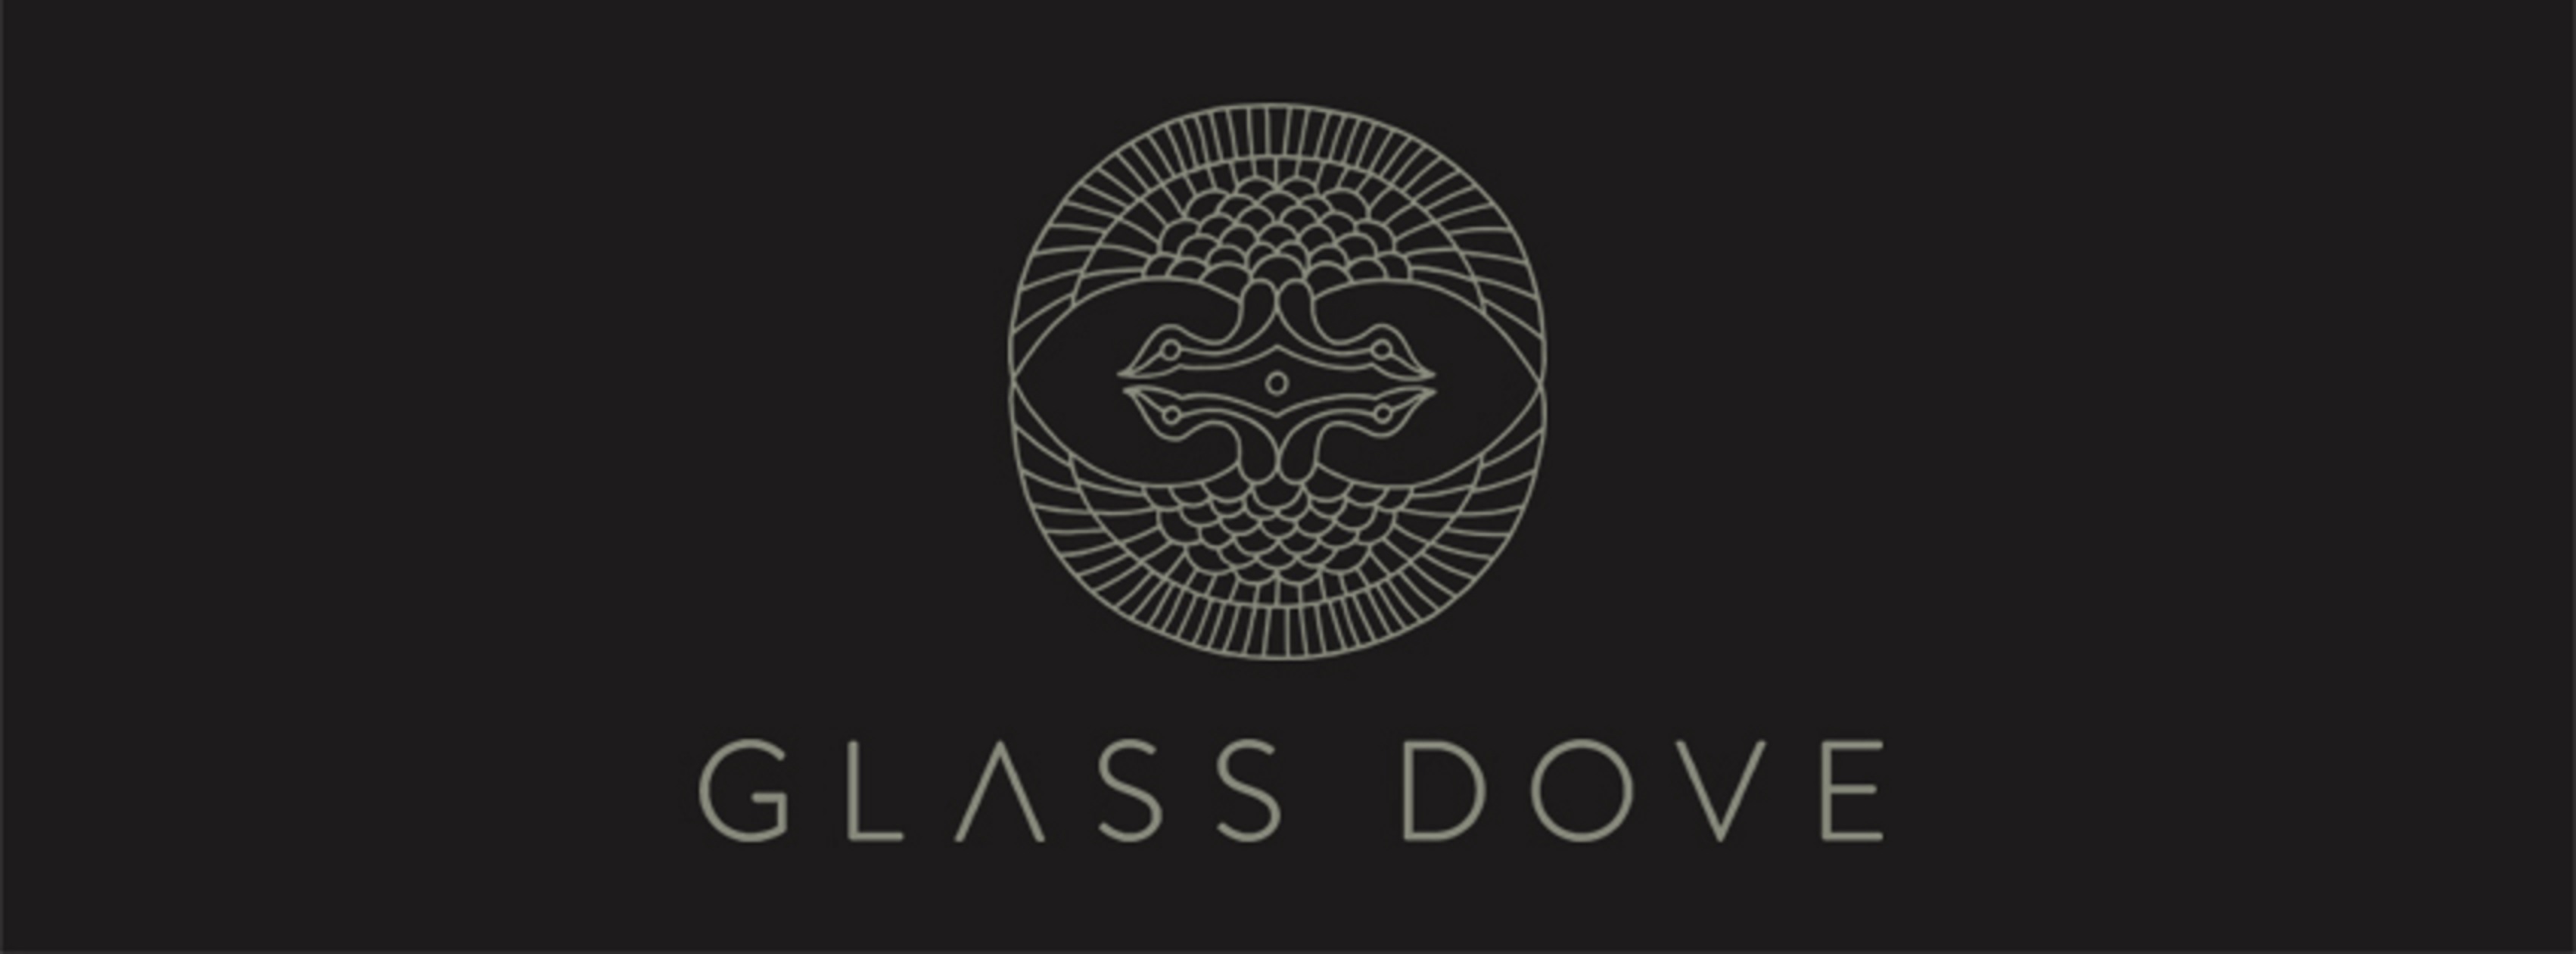 Glass Dove release video for "Terrible Secrets"